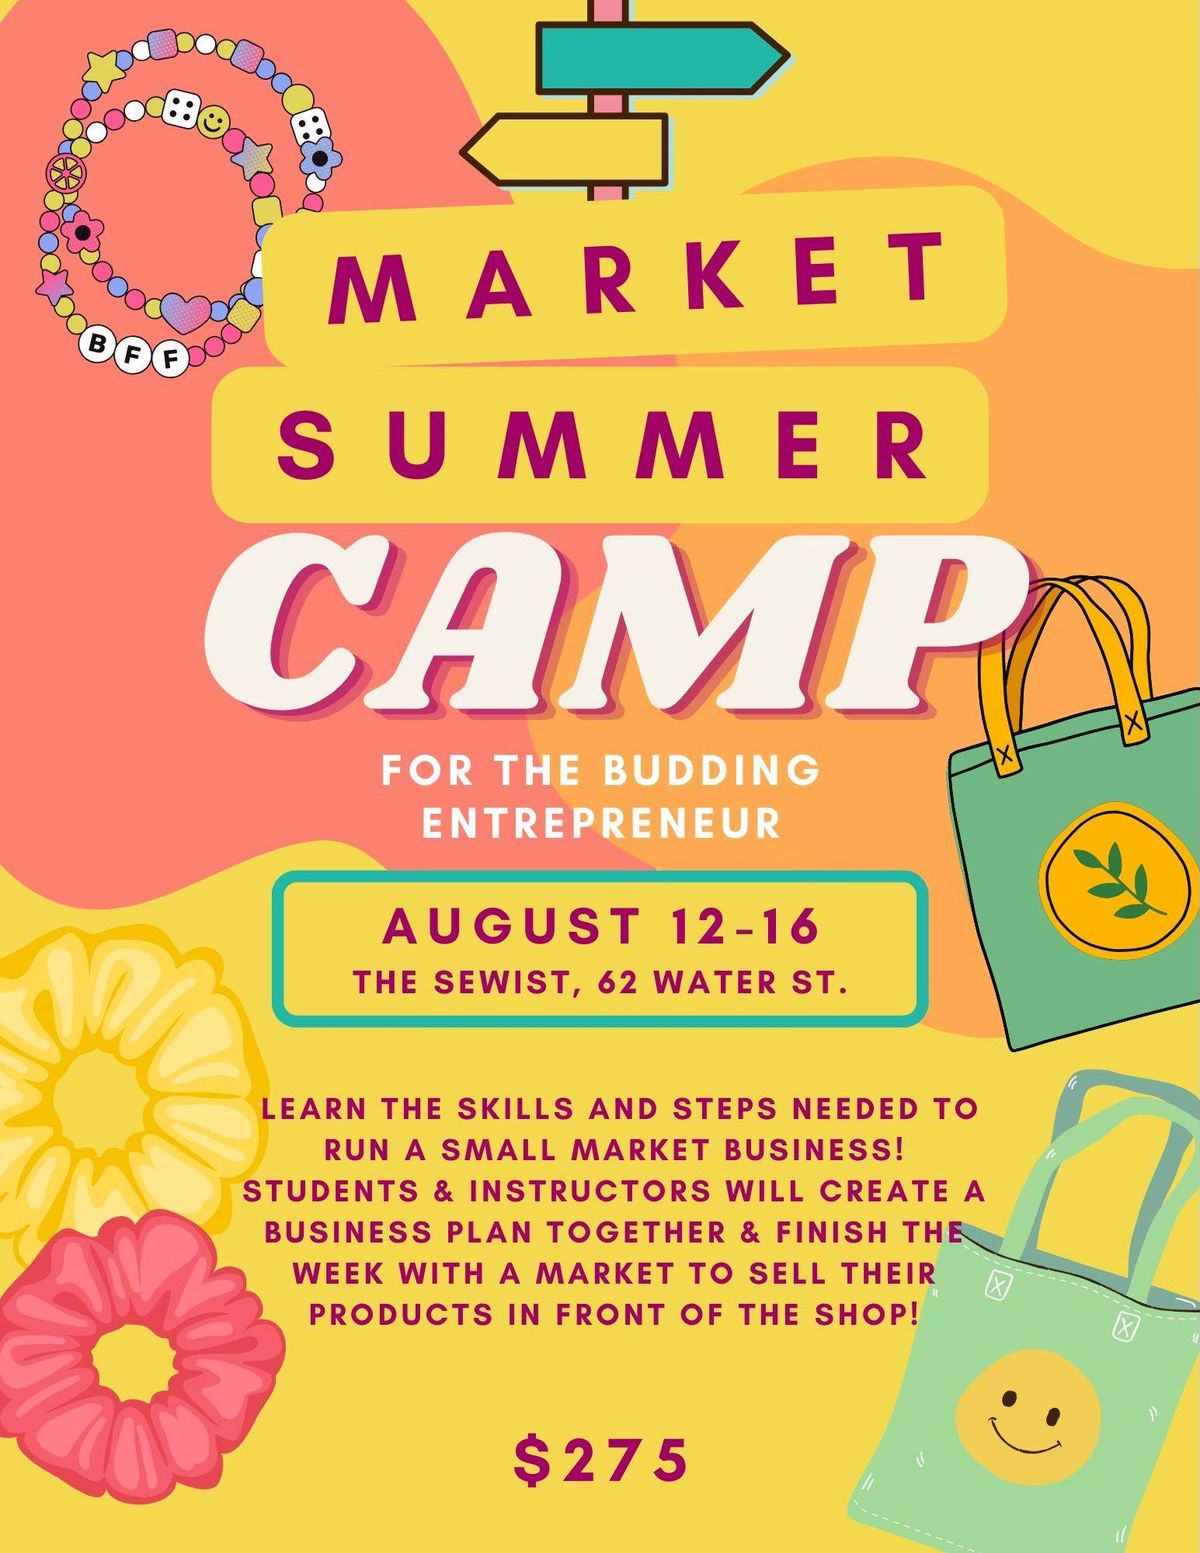 Market Summer Camp